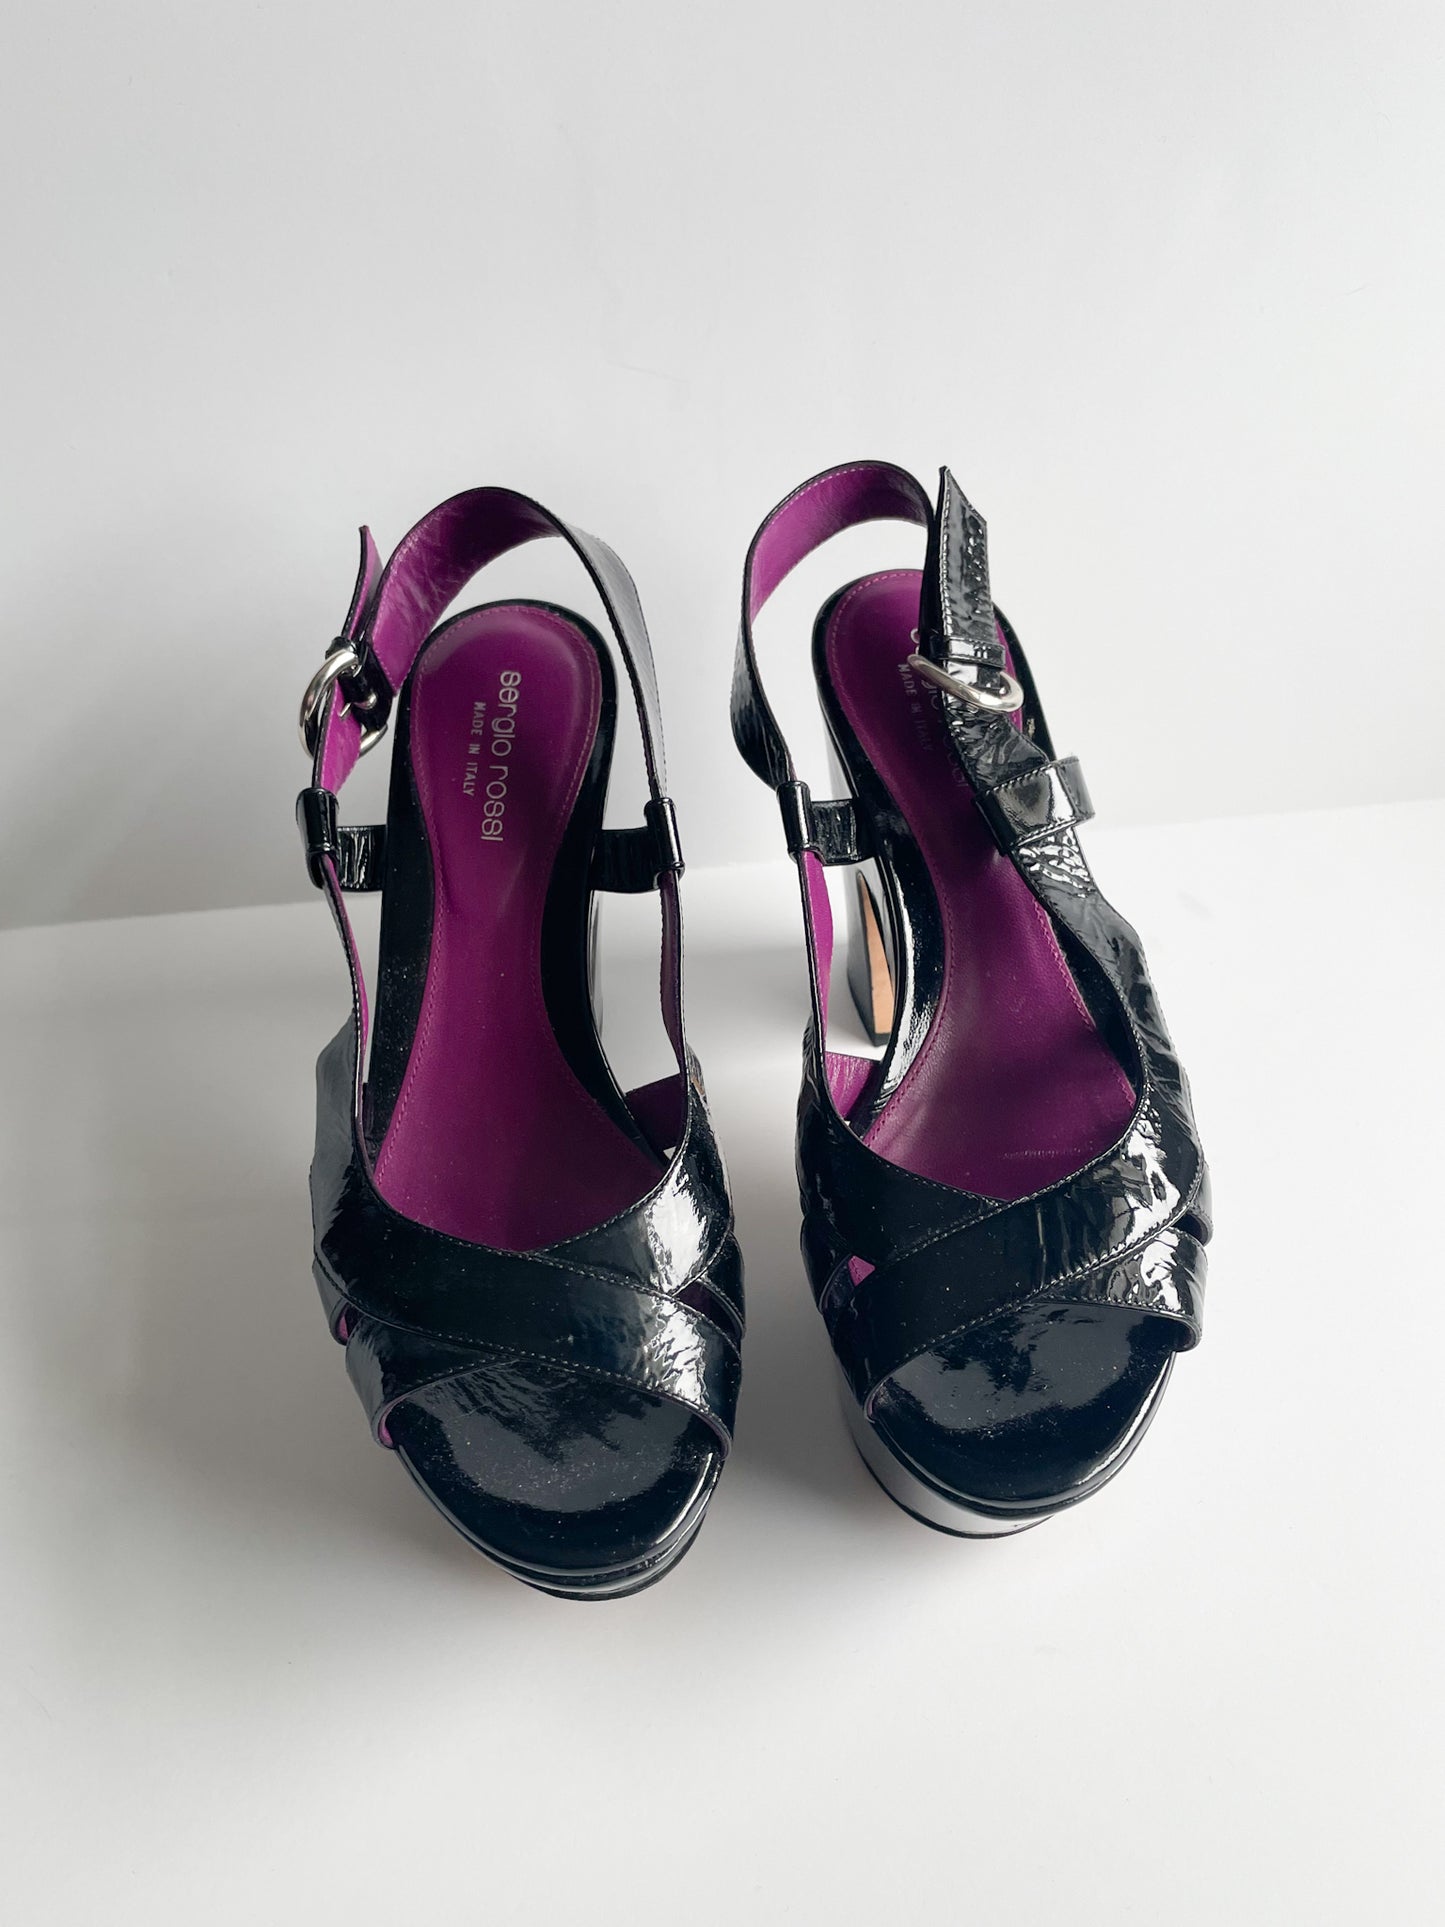 Sergio Rossi Black Patent Leather Luxury Platform Slingback Sandal Heels - Size 38.5 (8.5)